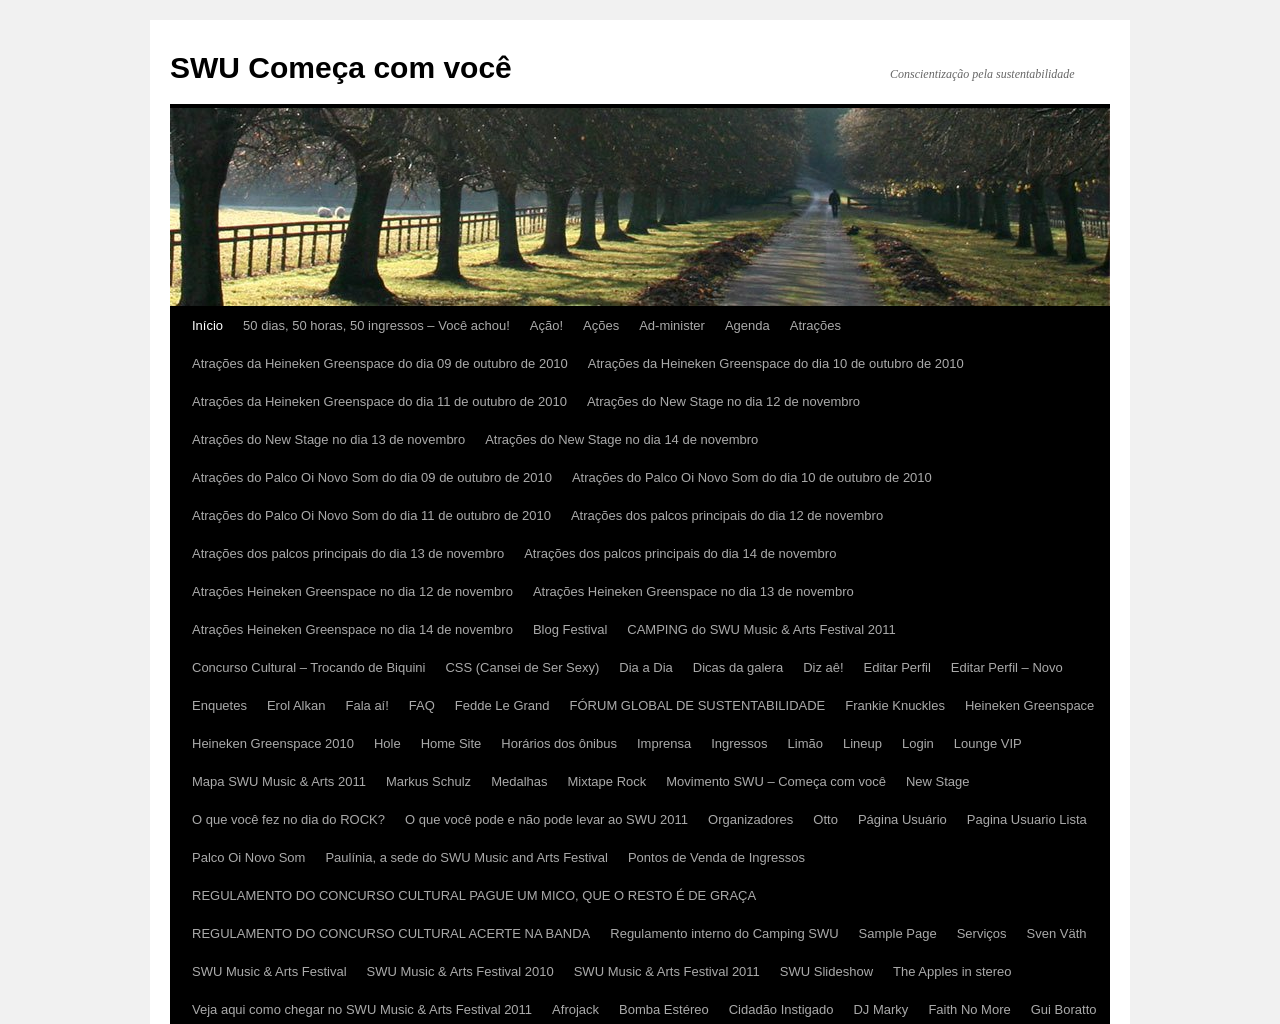 swu.com.br